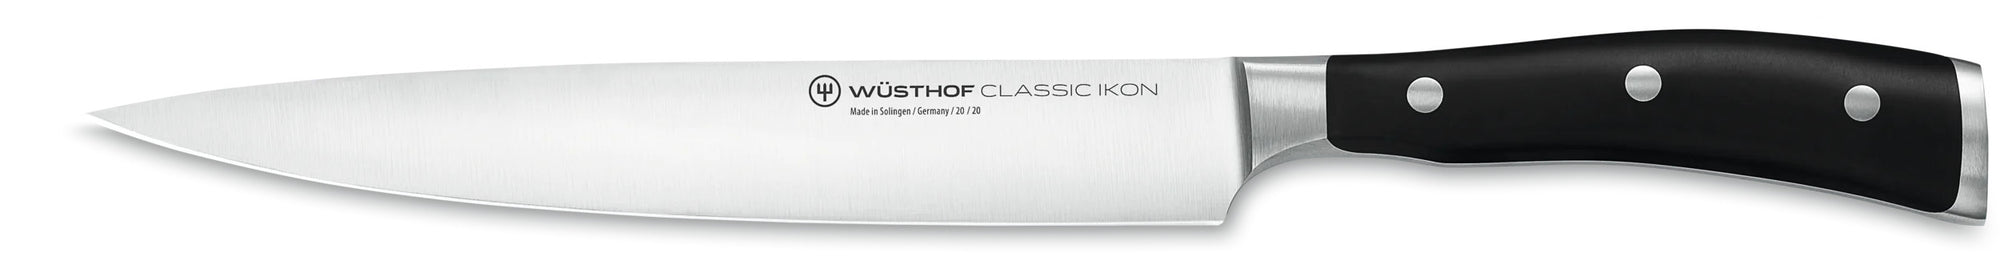 Wusthof Classic IKON 8-inch (20cm) Carving Knife - 4506-20